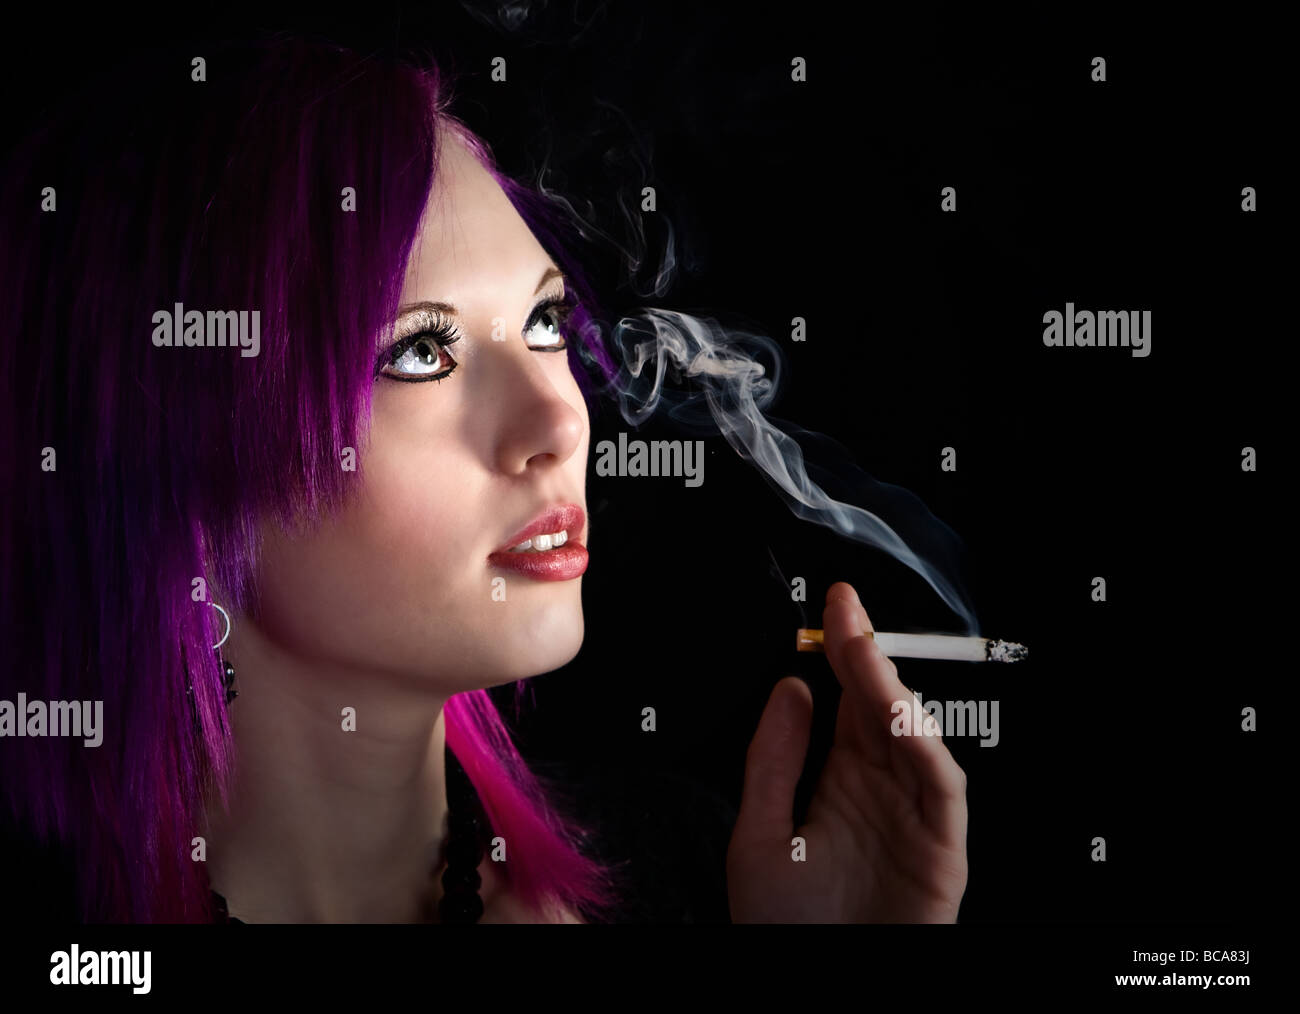 Alternative Teenager Smoking a Cigarette Stock Photo